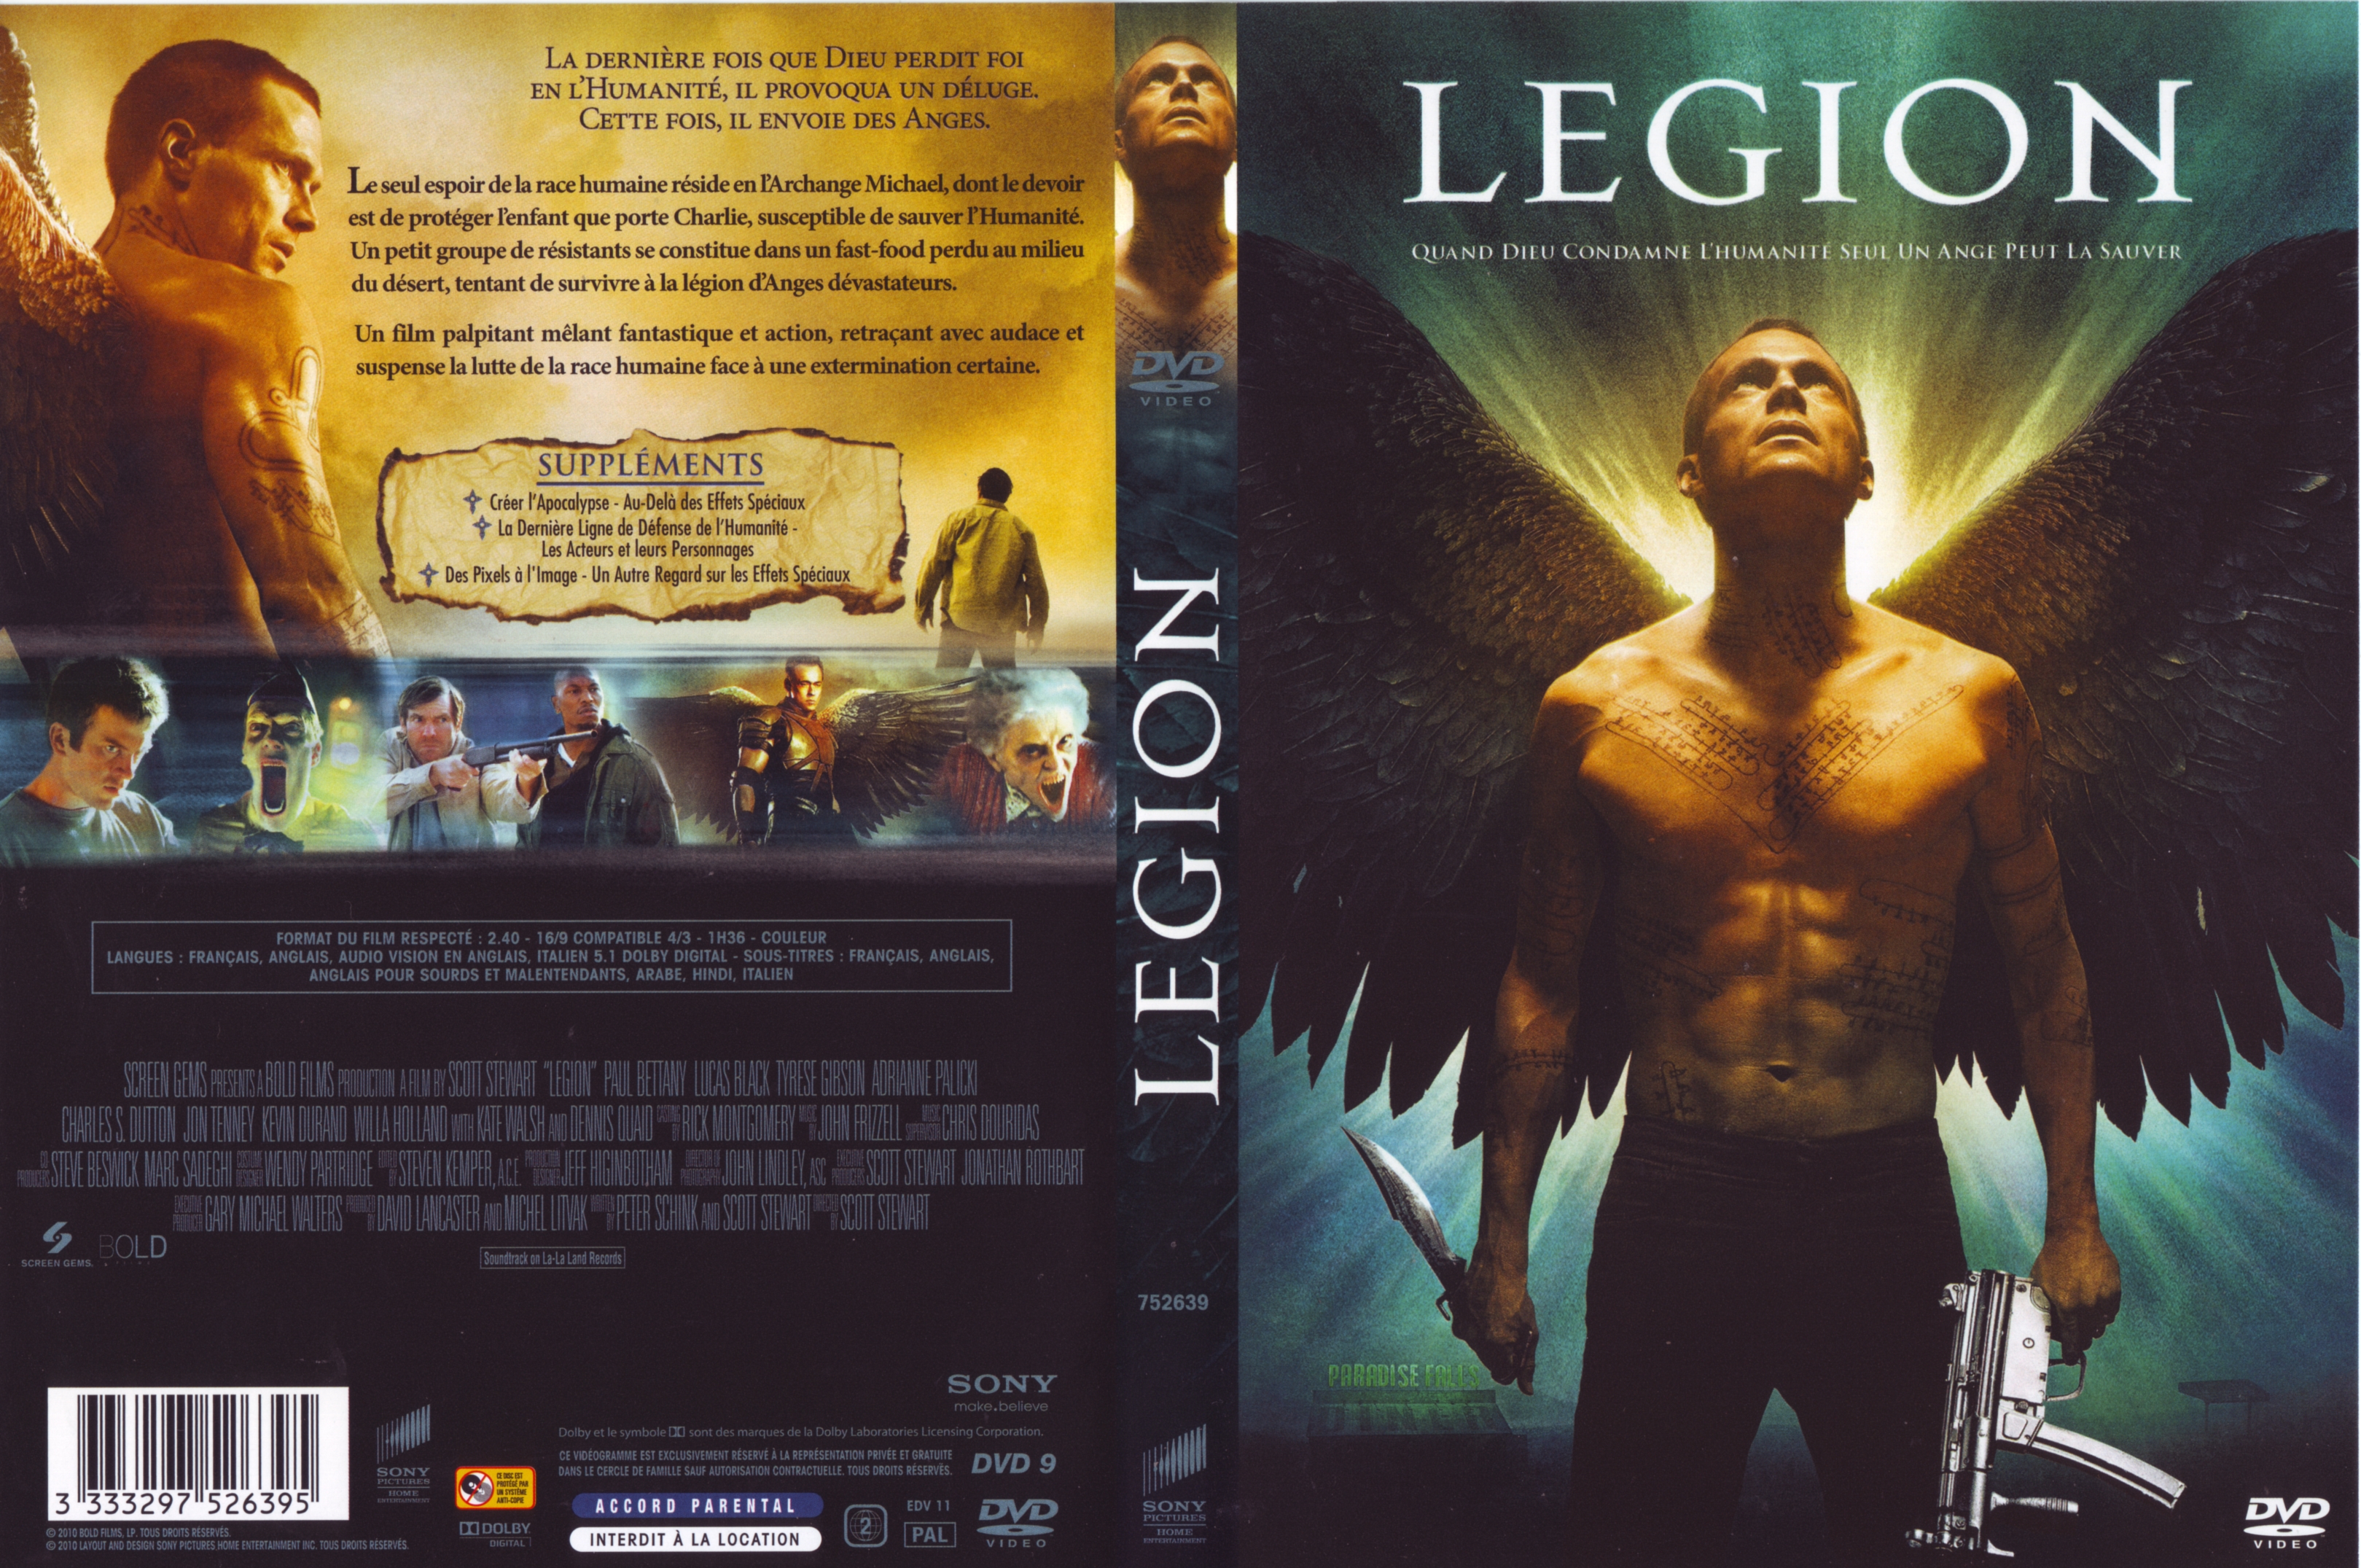 Jaquette DVD Legion